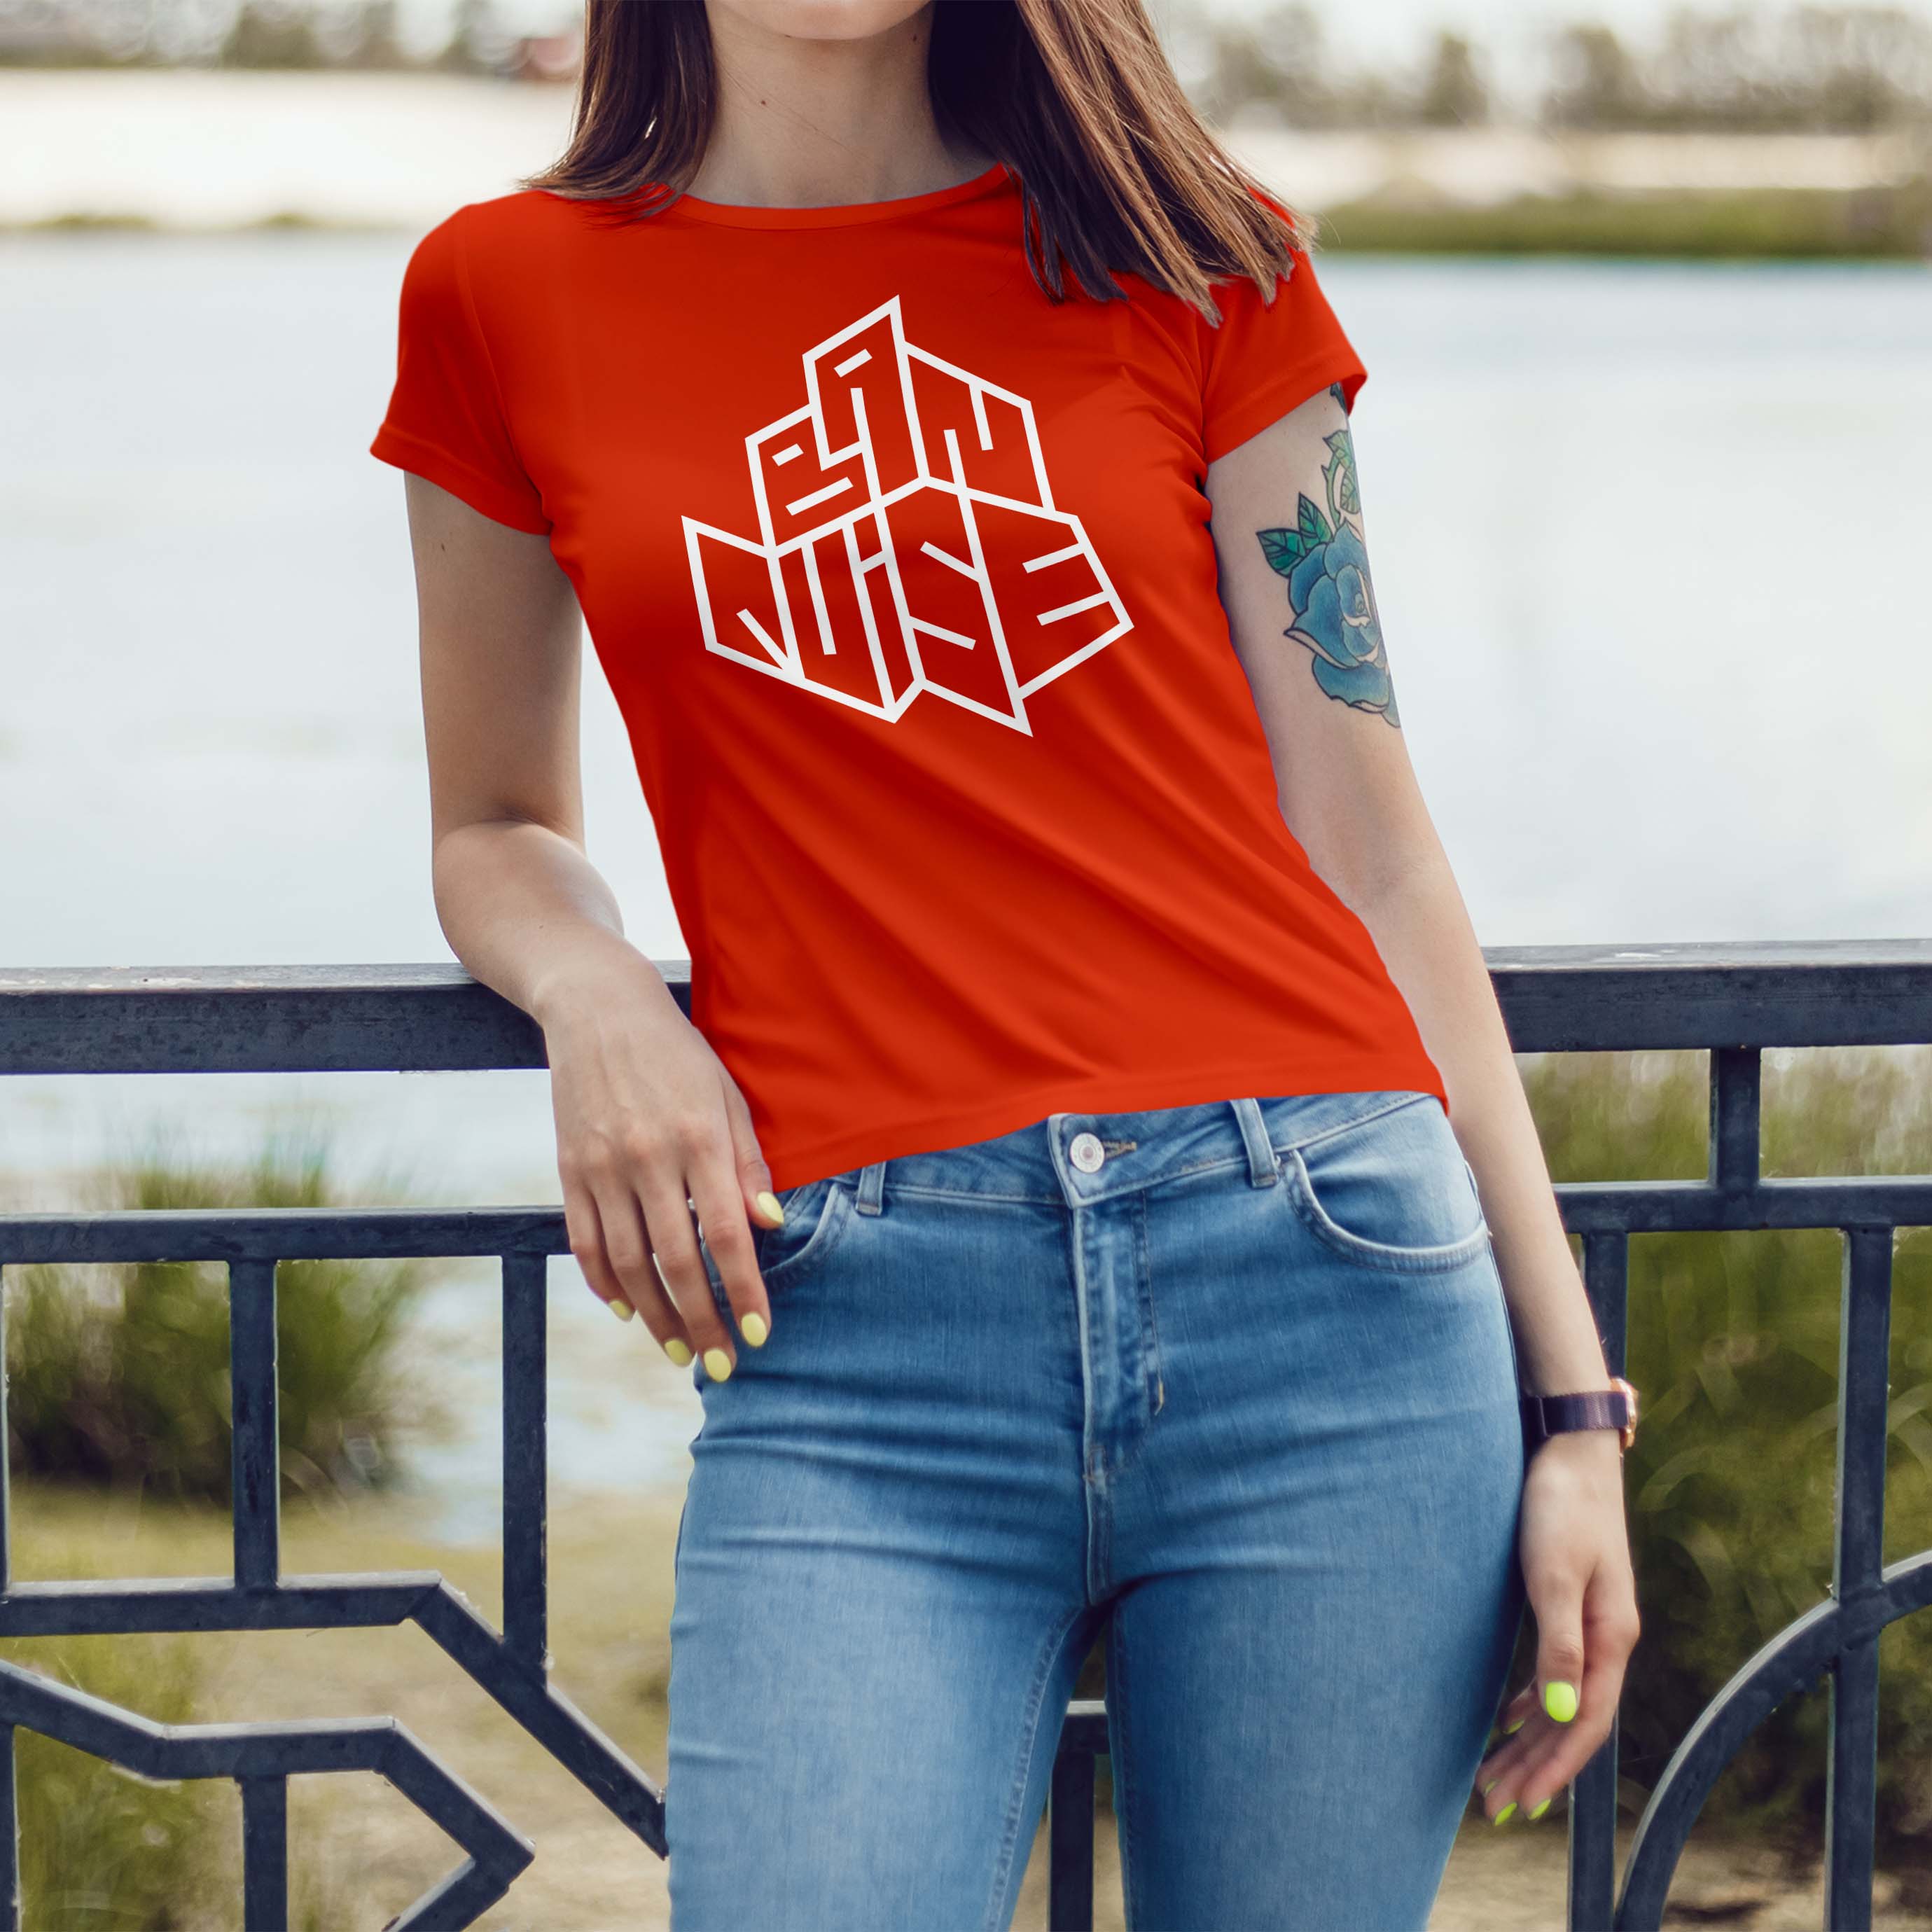 La Banquise redesign mockup on a t-shirt